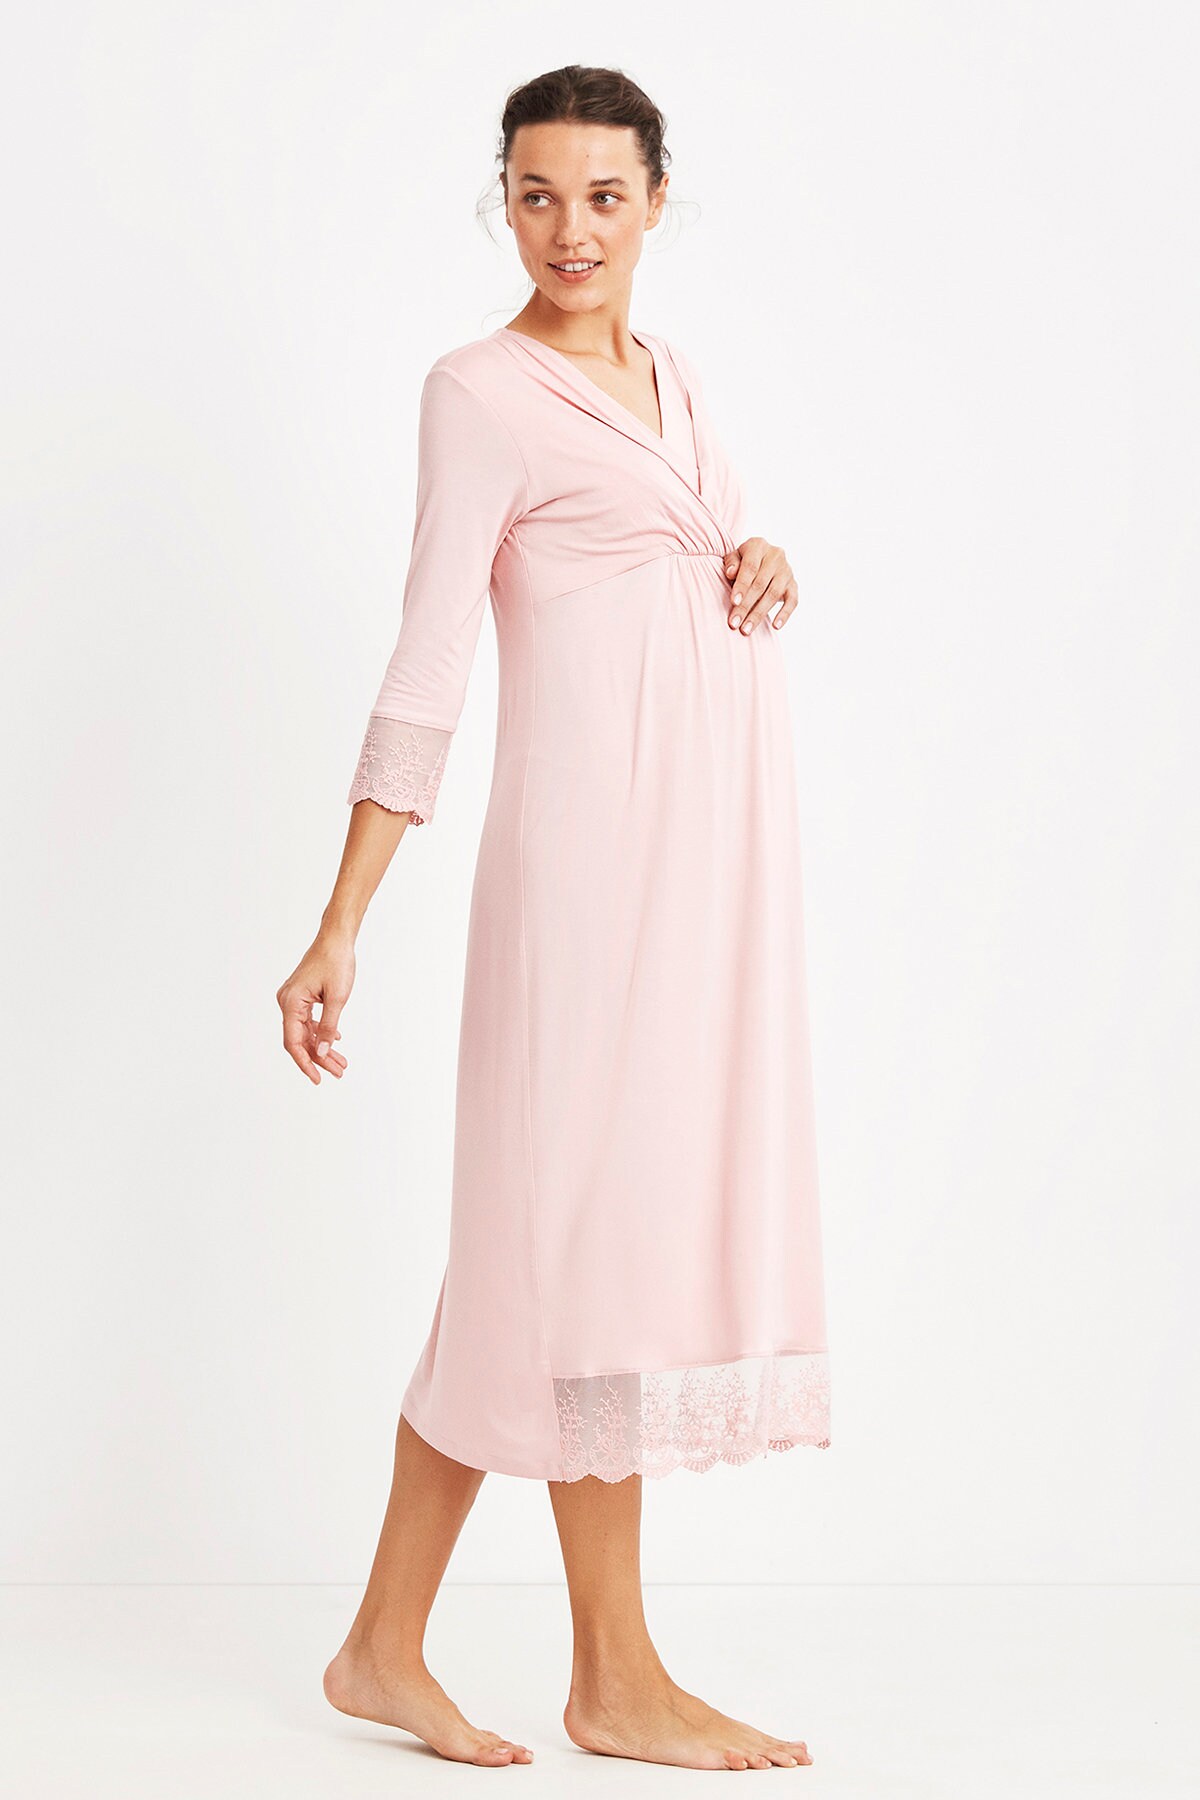 Maternity Dress PhotoShoot I Solid Ecru / Pink Pregnancy - Etsy México